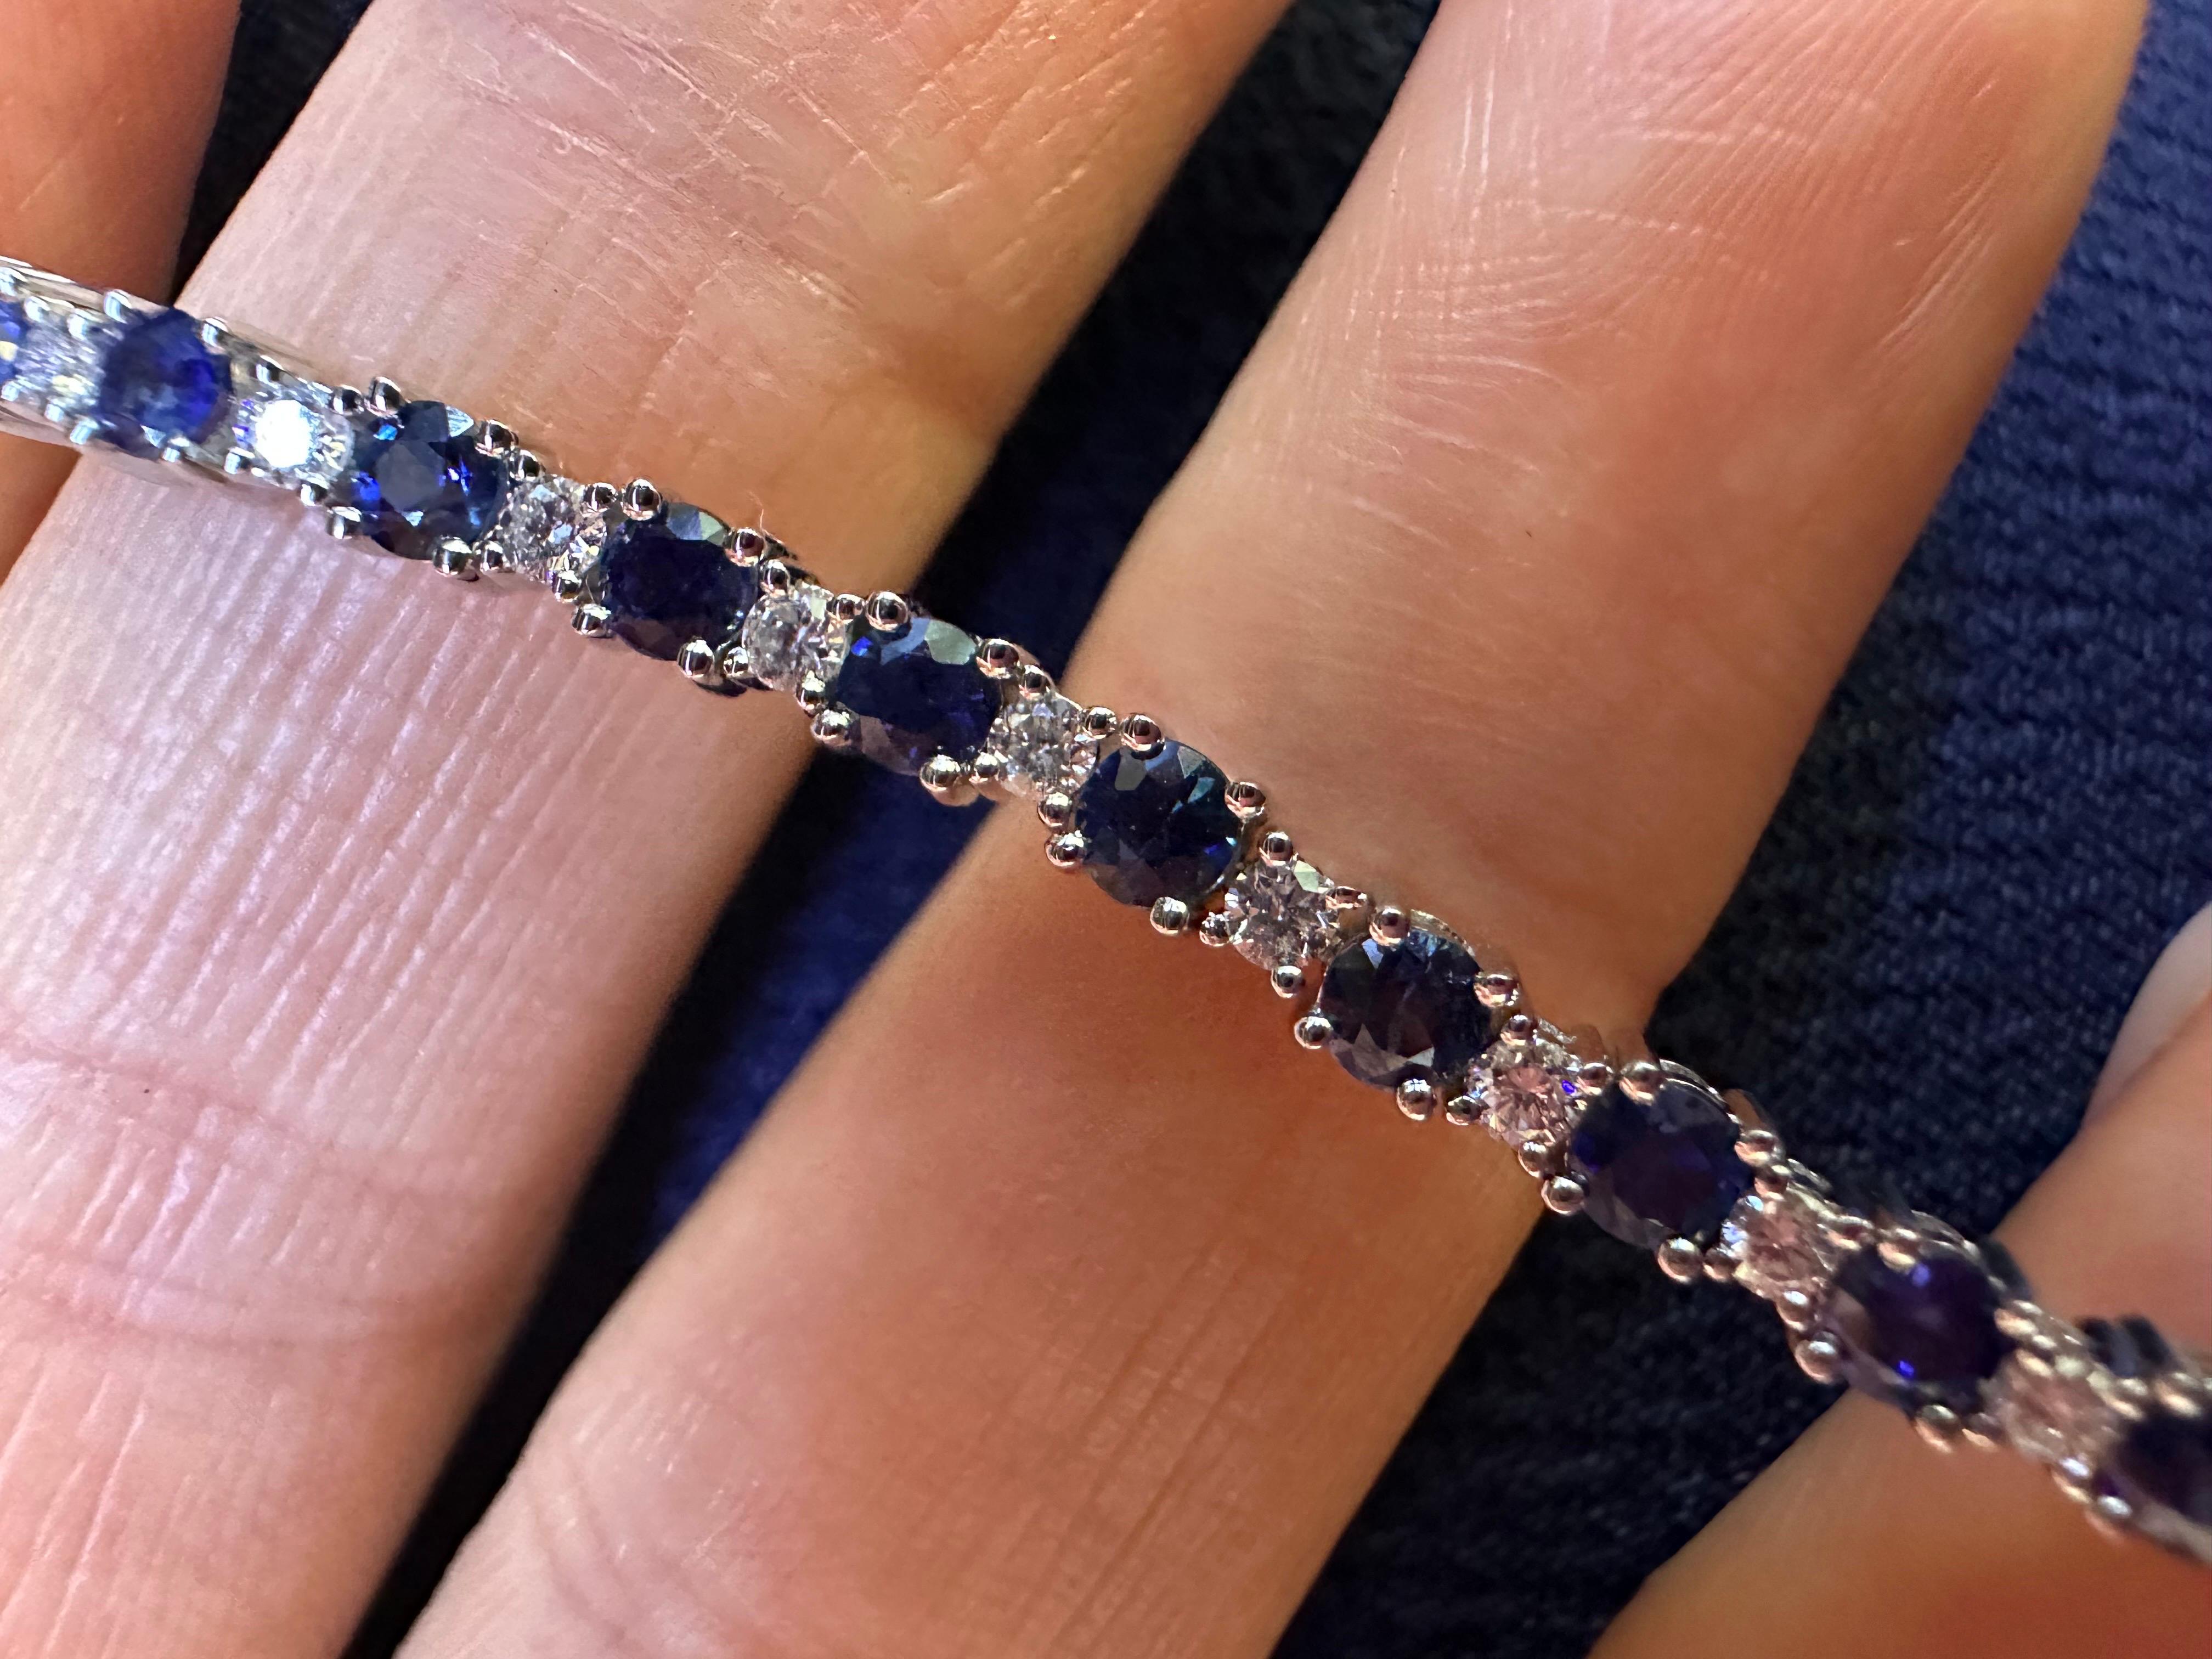 Blue sapphire and diamond tennis bracelet 18KT white gold 7